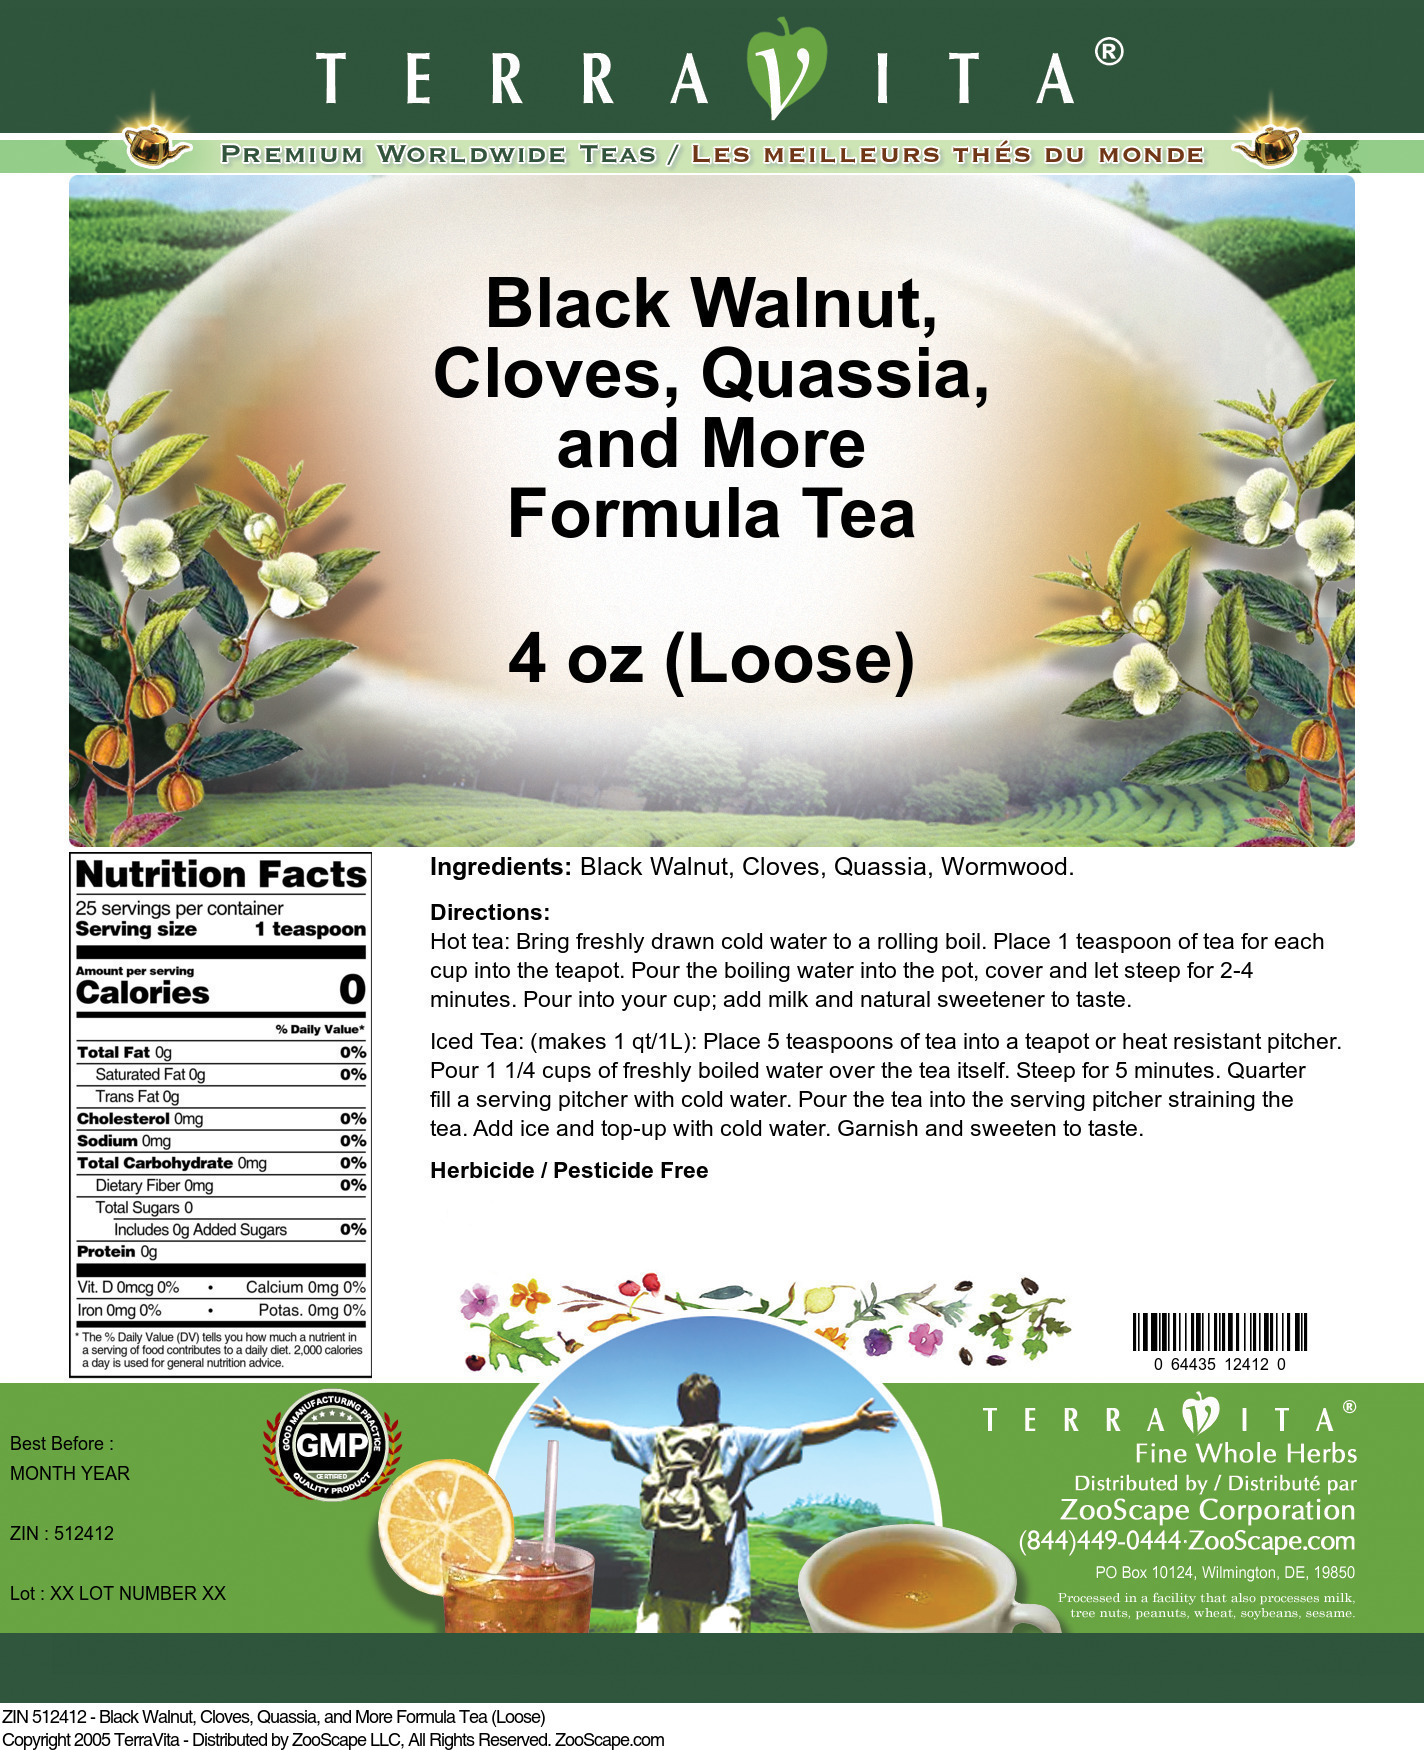 Black Walnut, Cloves, Quassia, and More Formula Tea (Loose) - Label